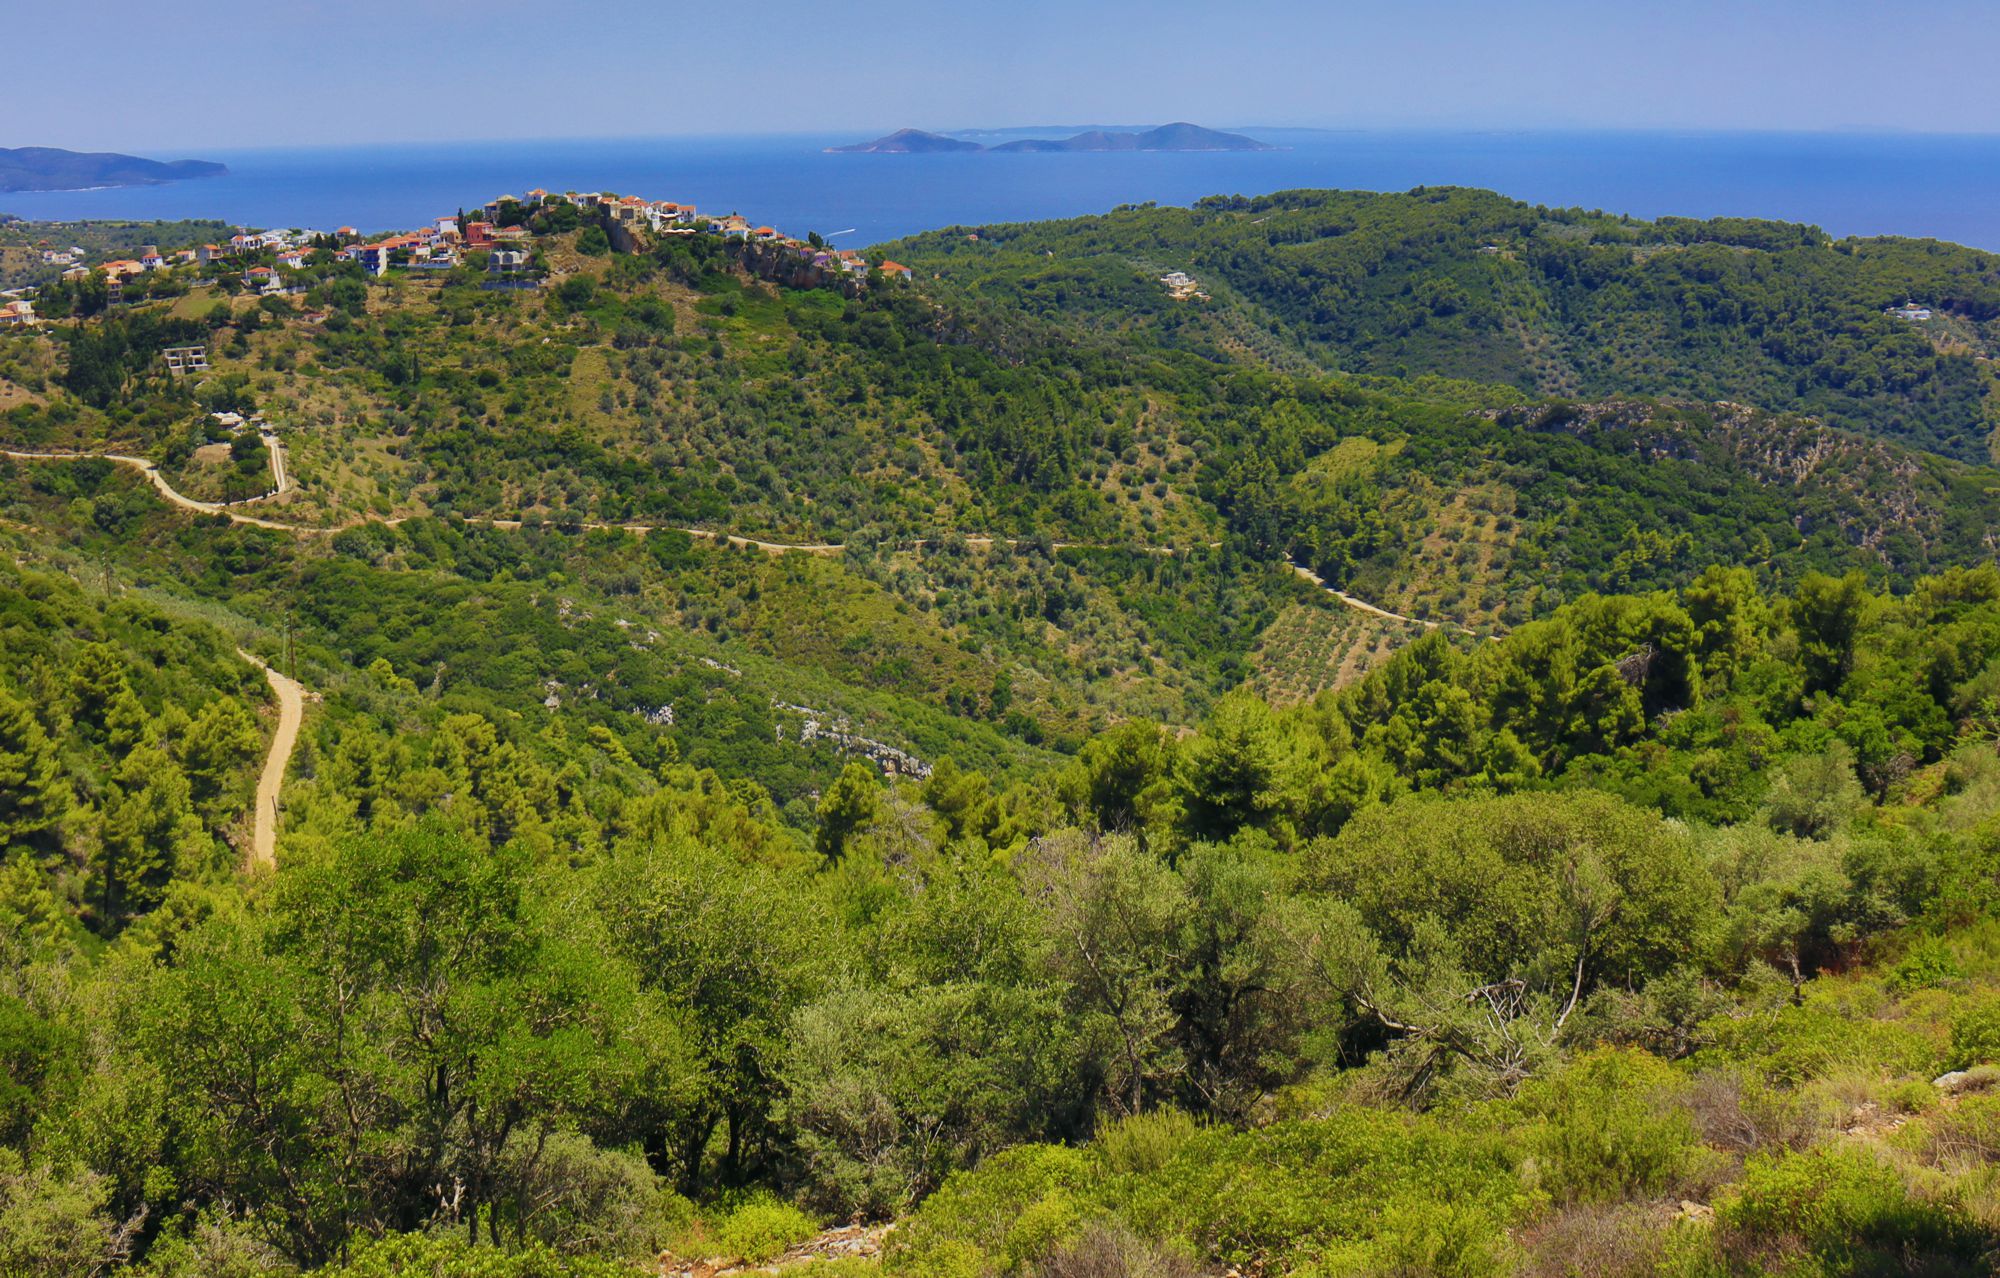 Alonnisos topoguide: Typical landscape of Alonnisos - the area around Chora